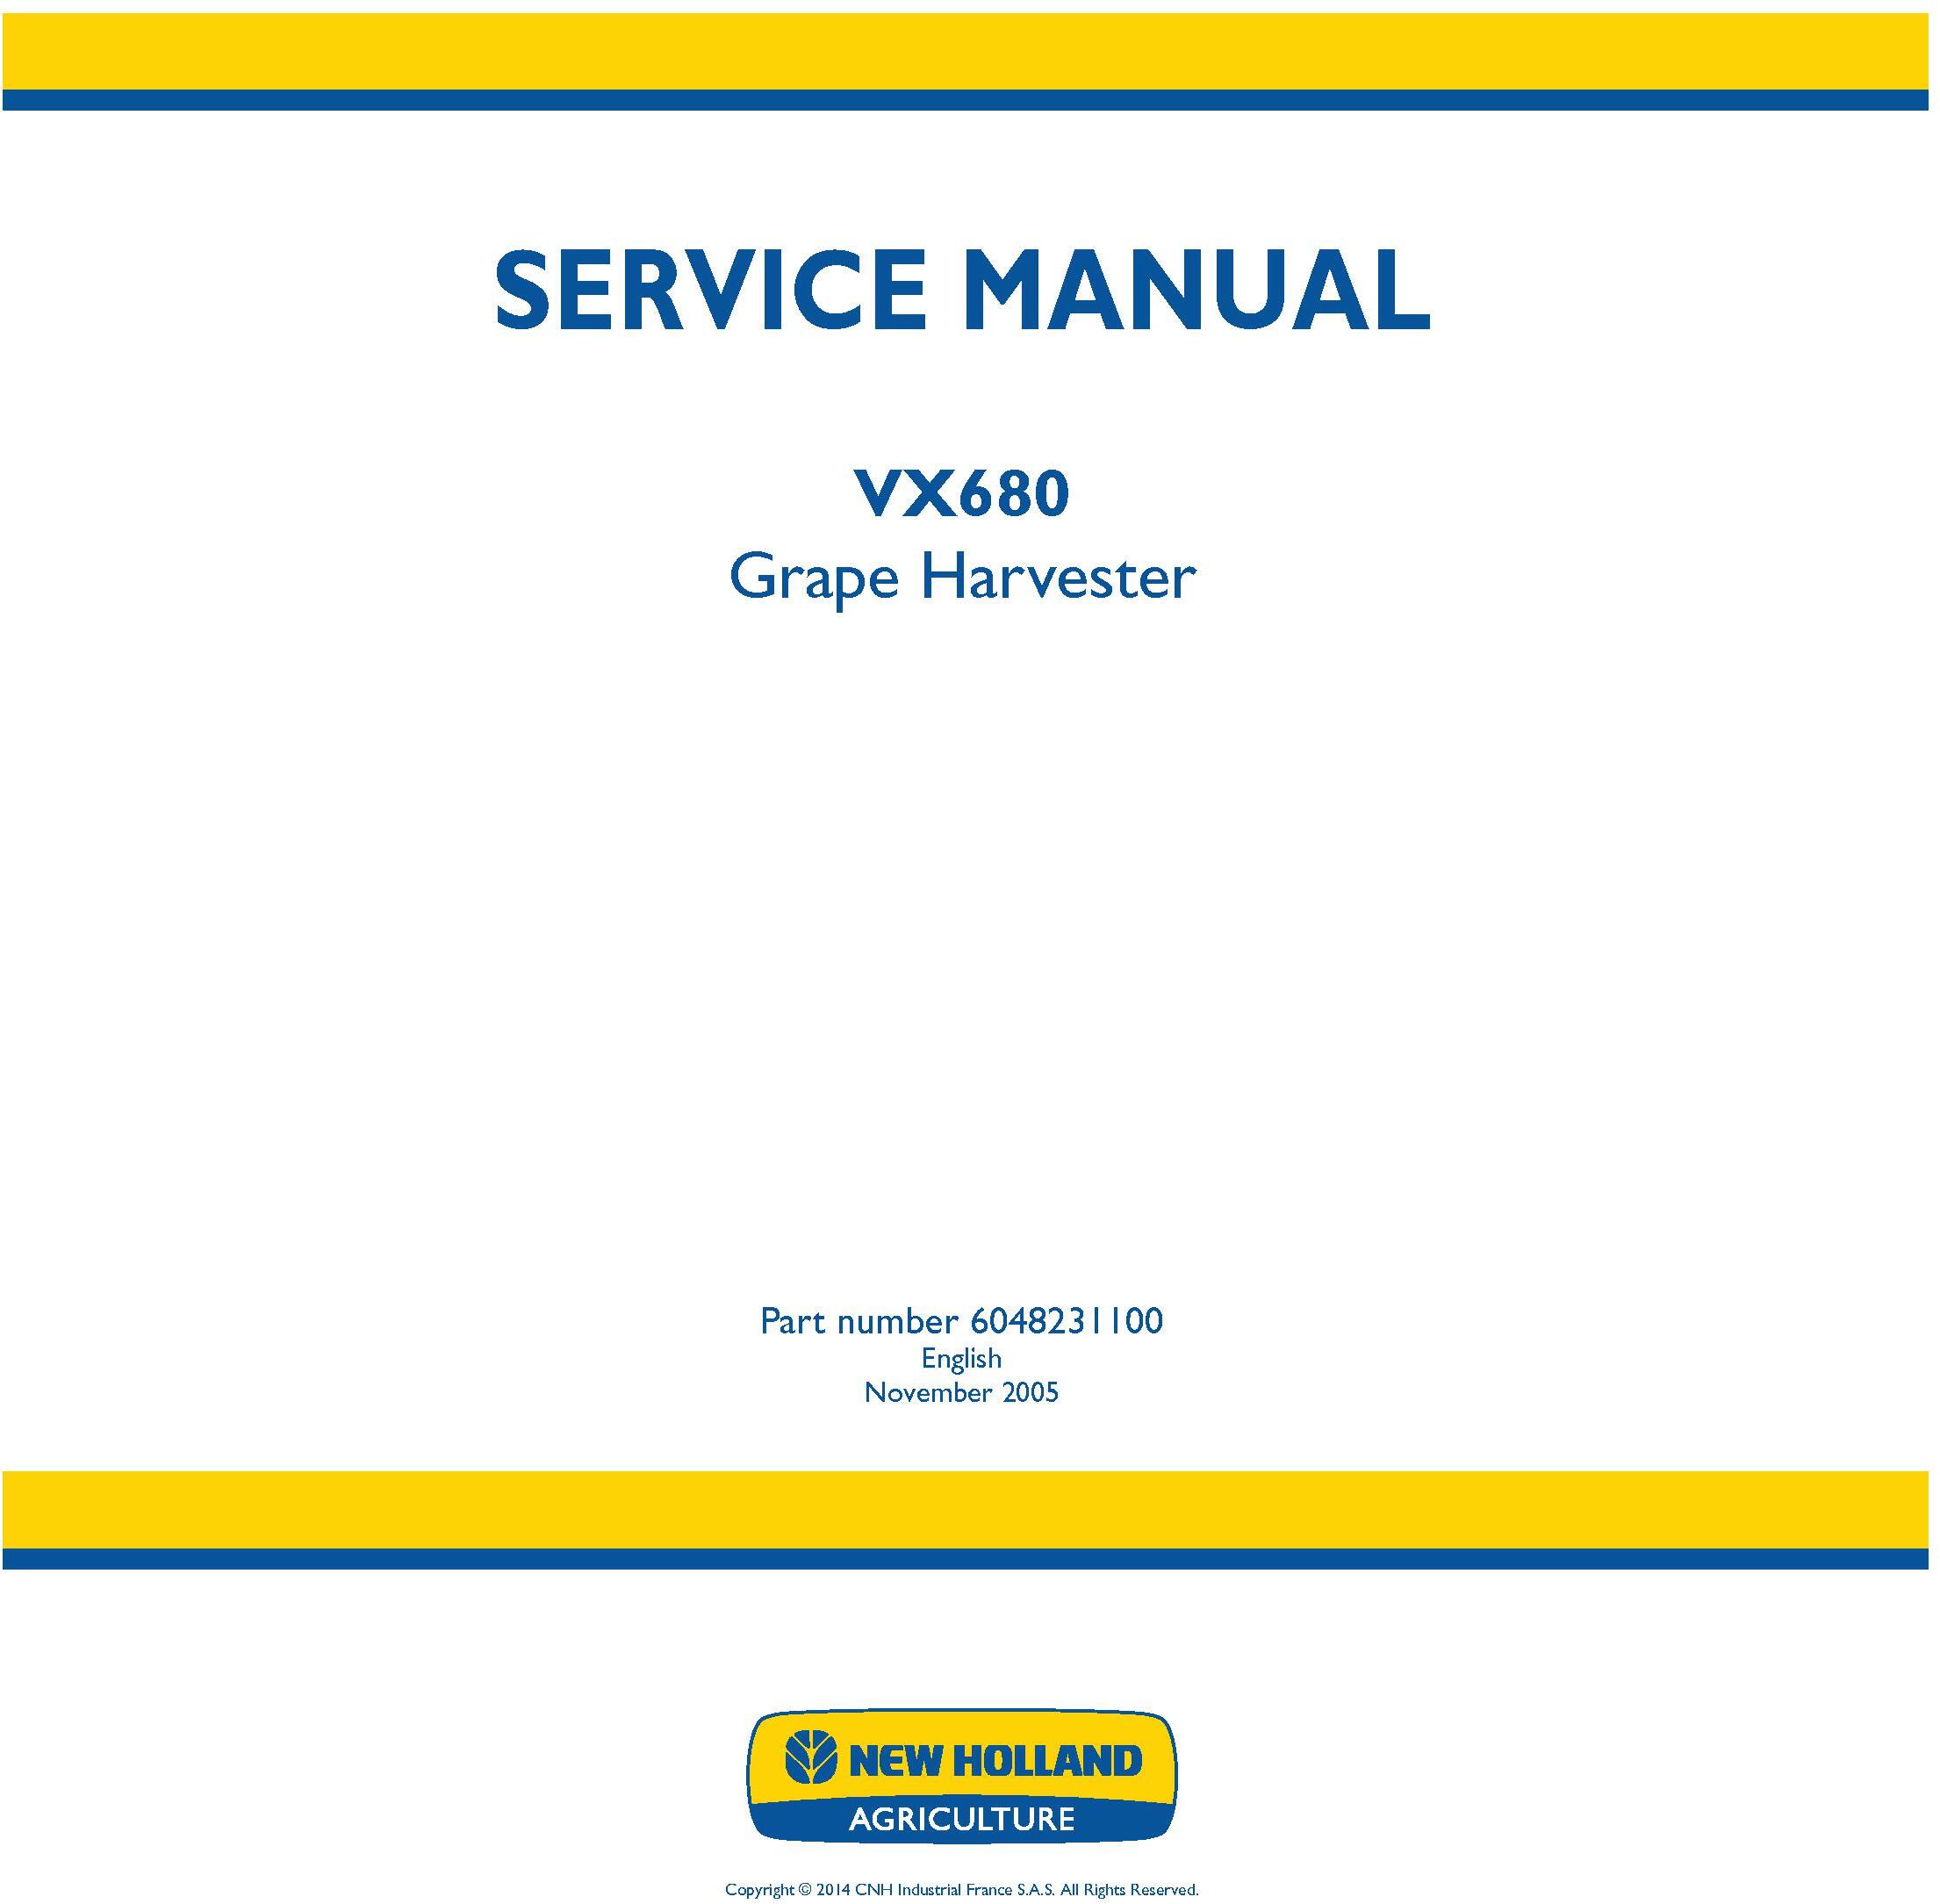 New Holland VX680 Grape Harvester Service Manual - 20010